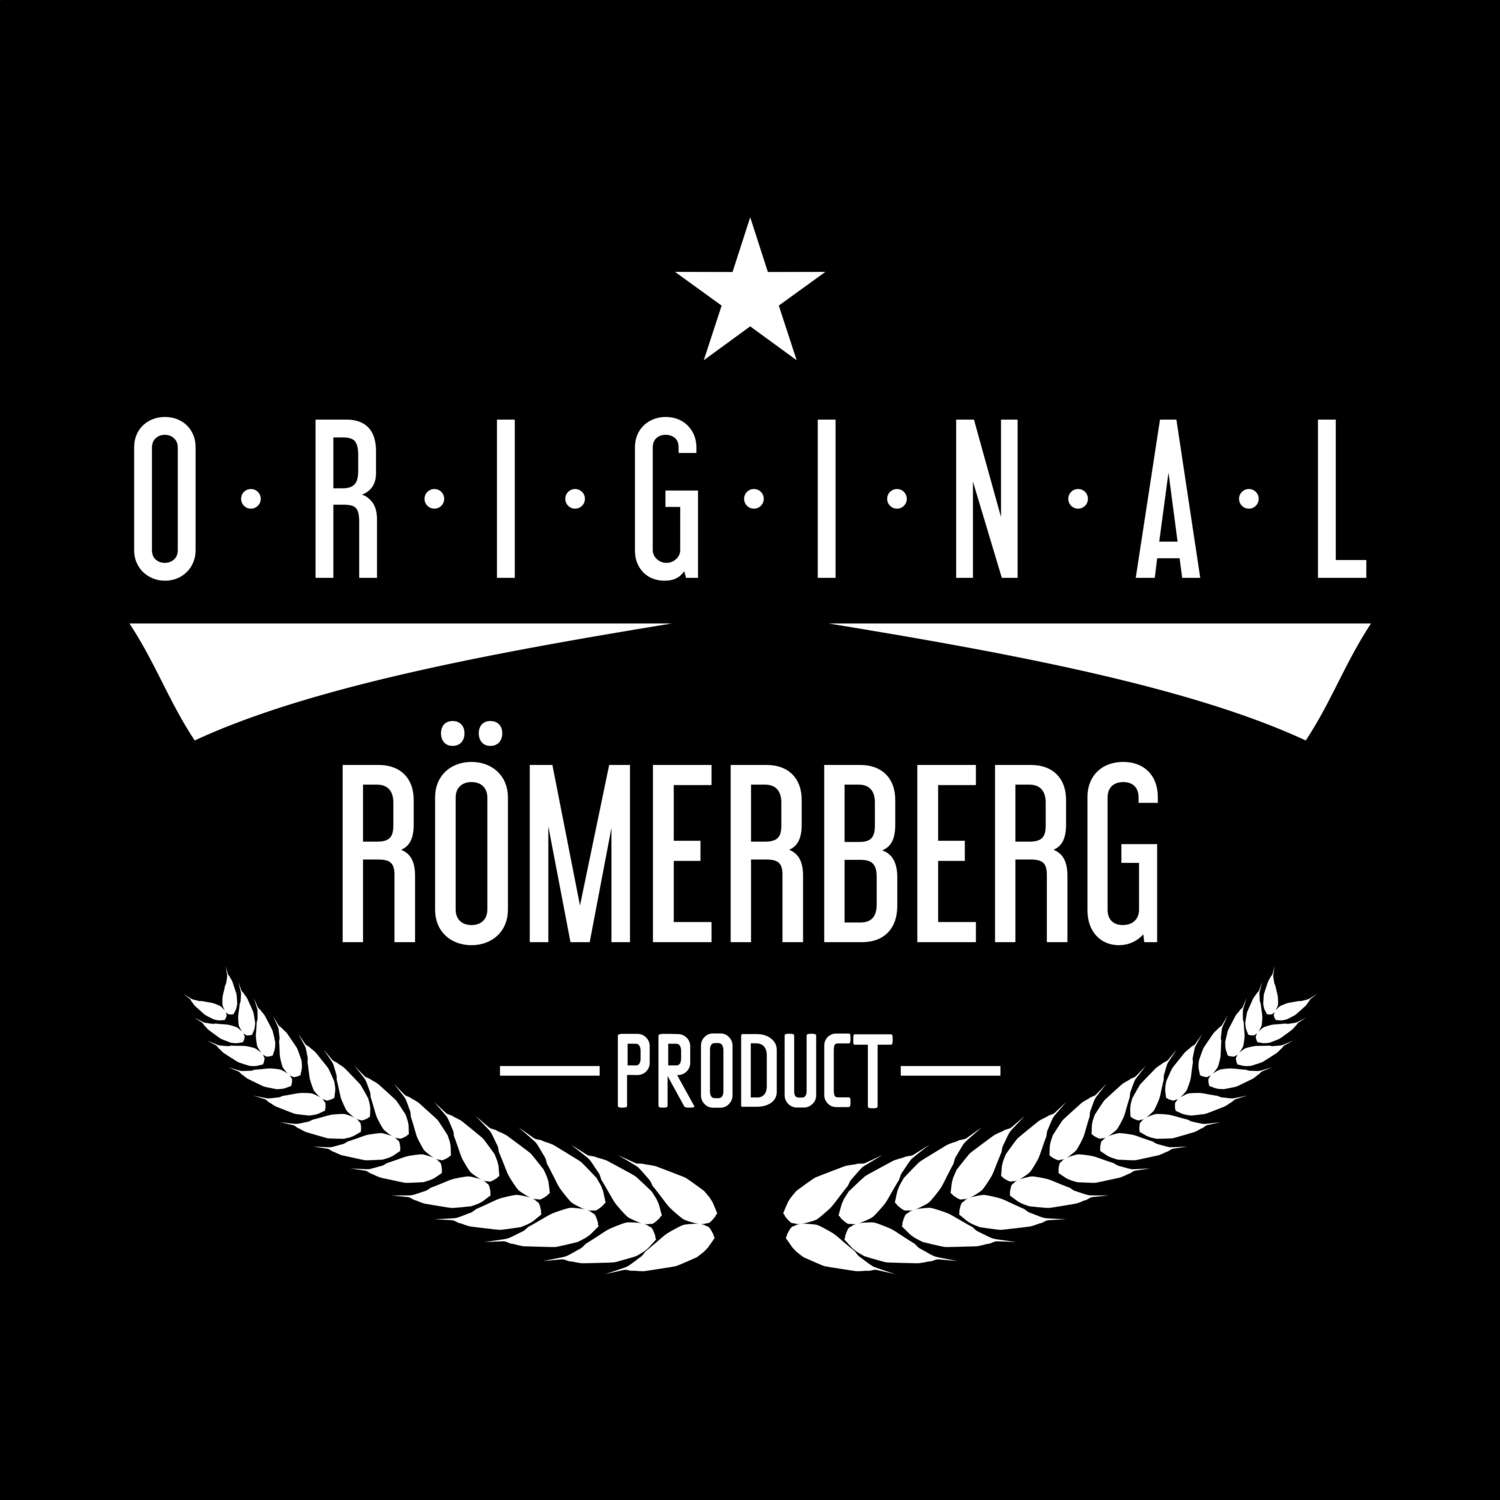 Römerberg T-Shirt »Original Product«